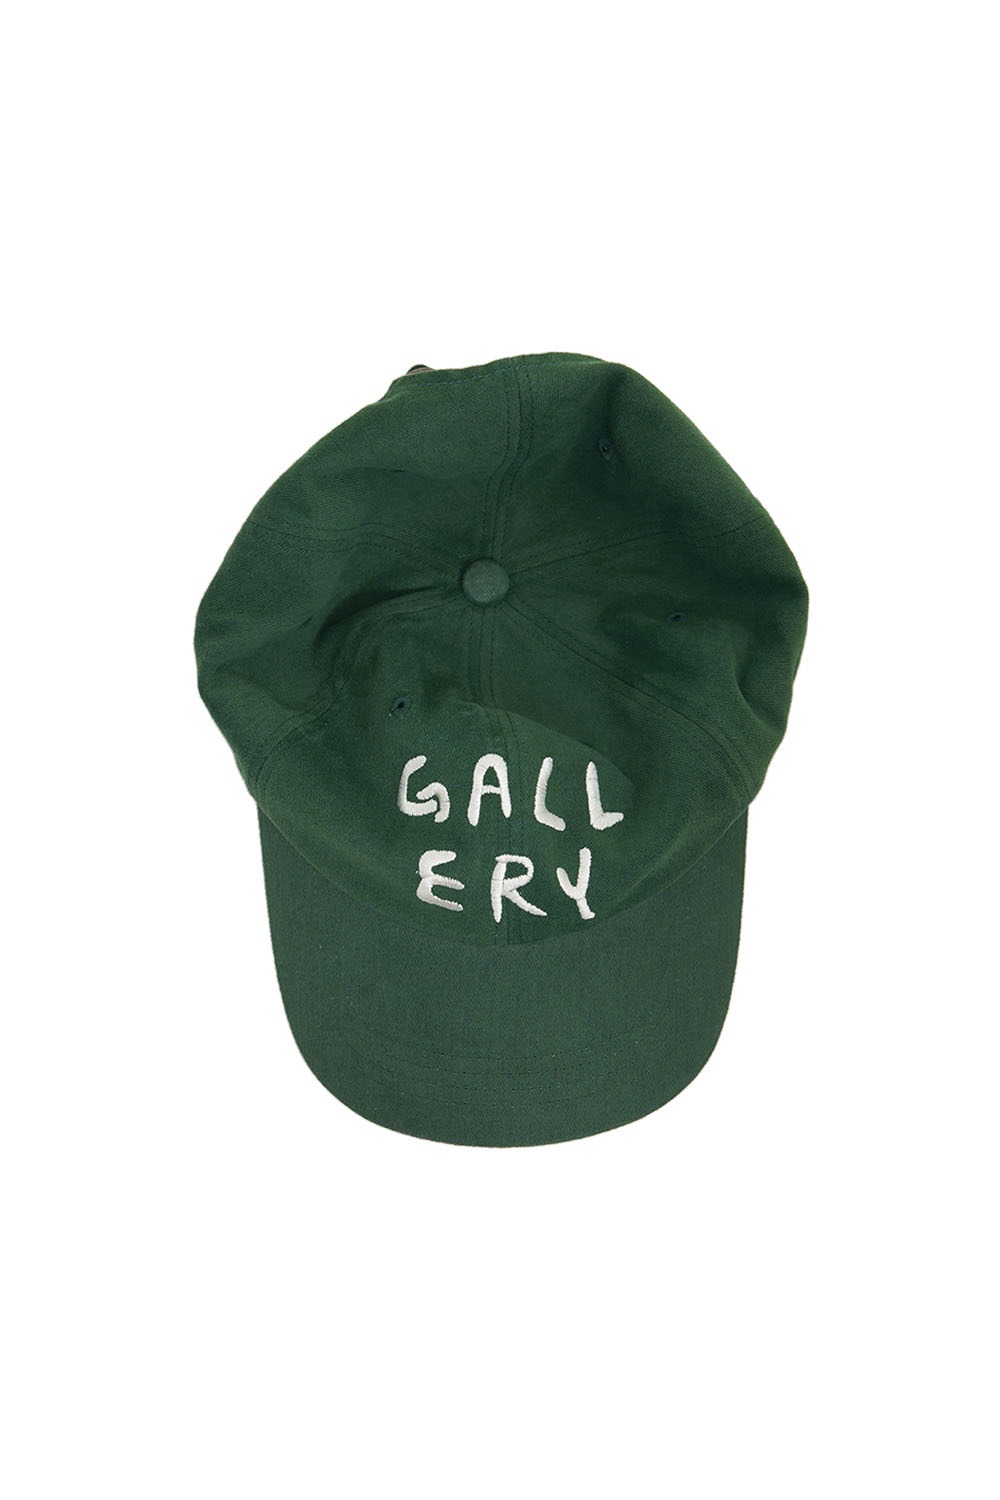 Gallery Logo Ball Cap - Green